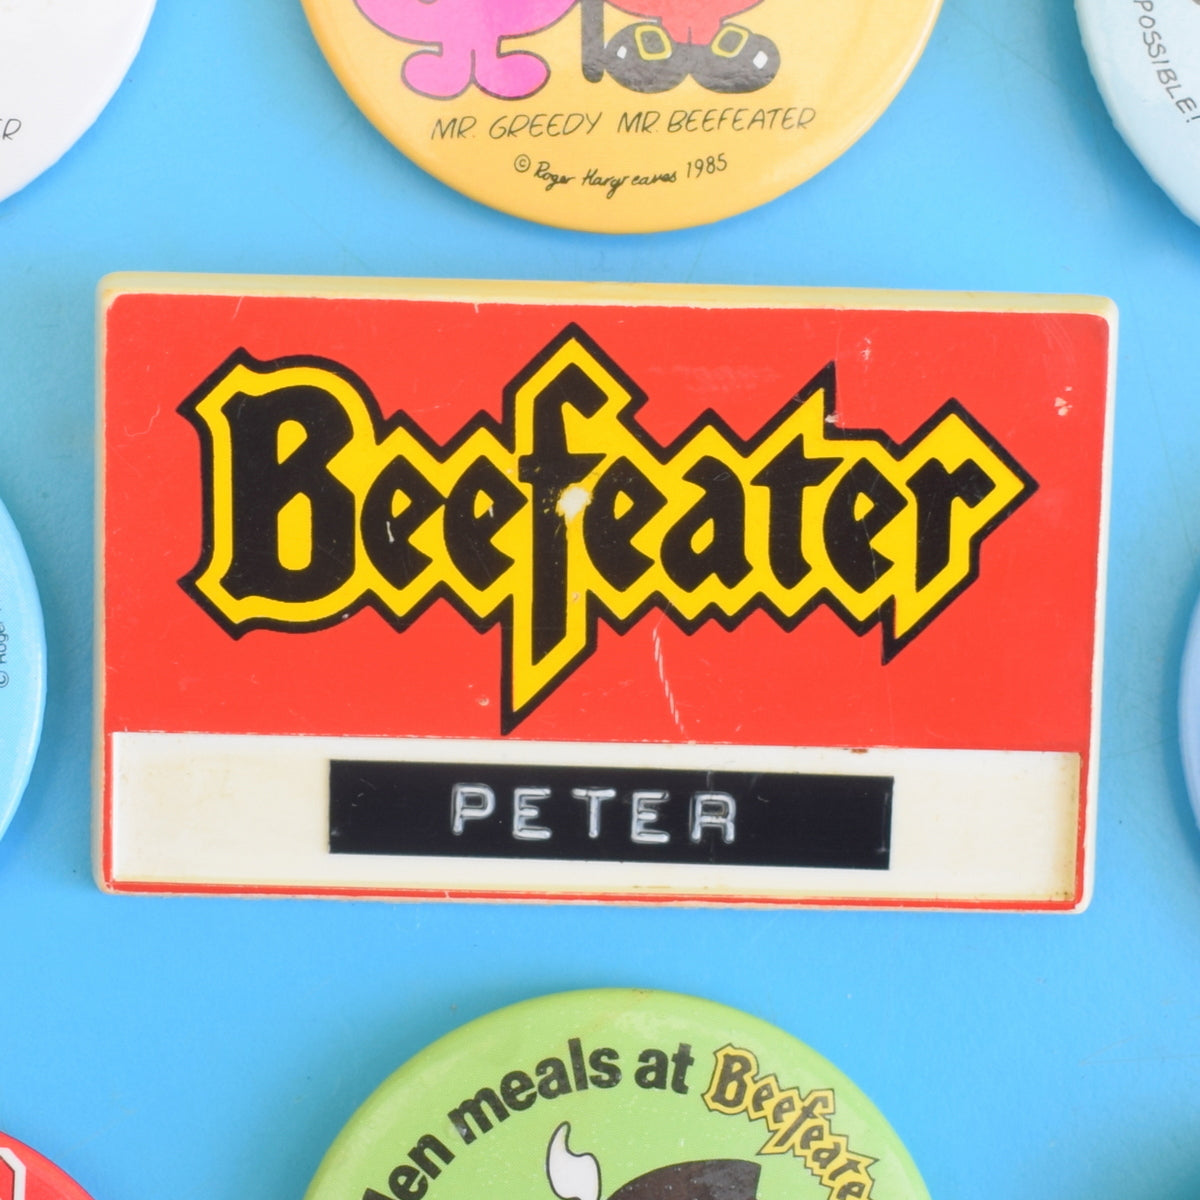 Vintage 1980s Badges - Beefeater Mr Men / Employee